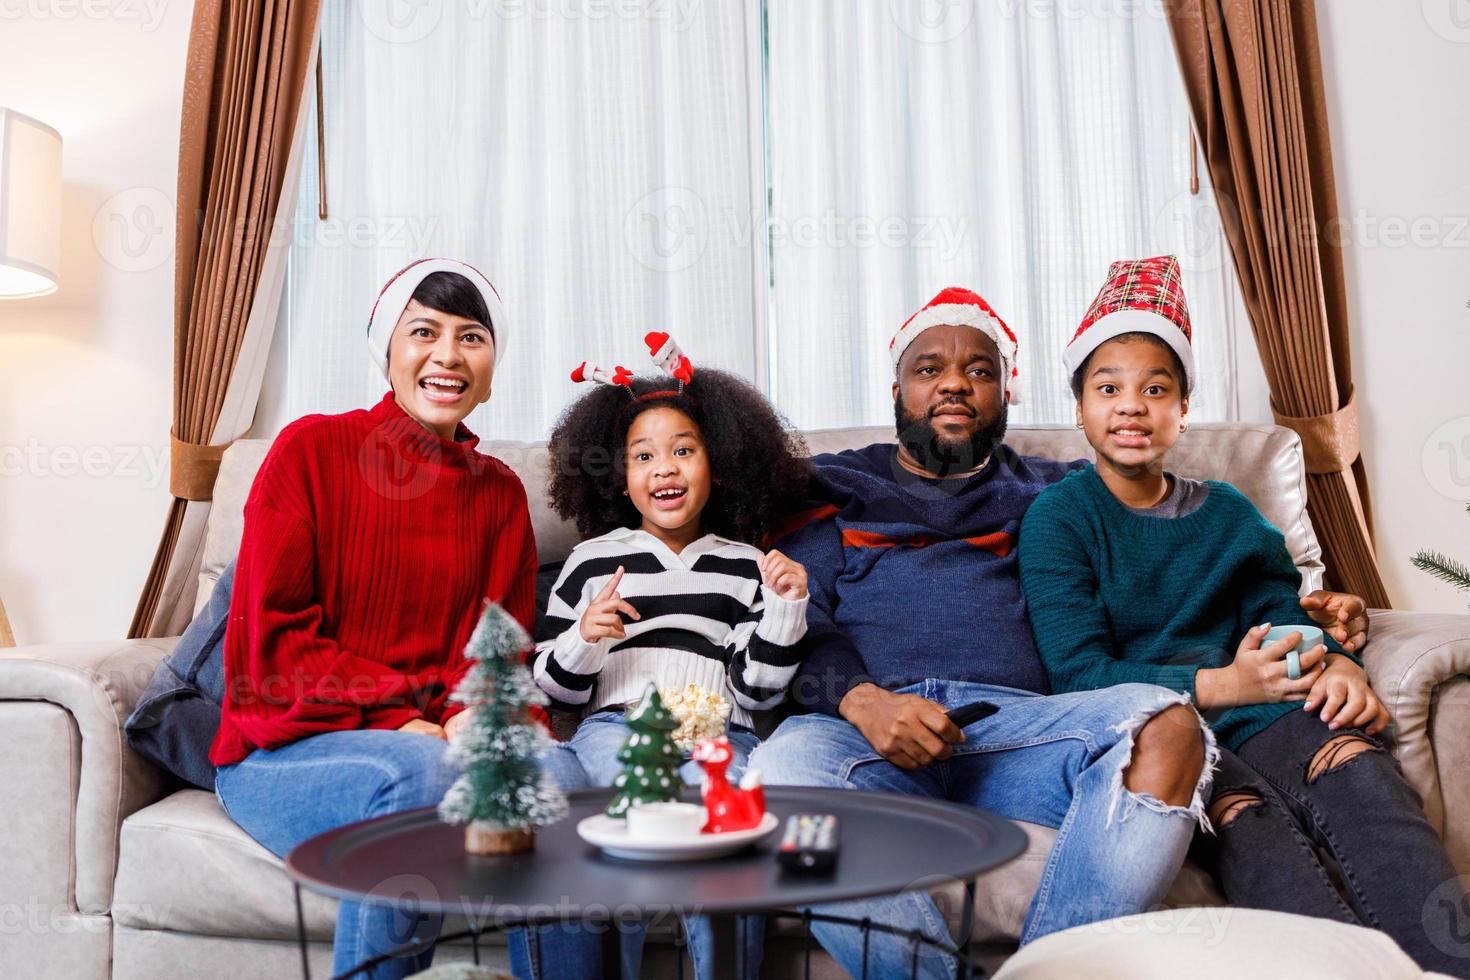 familia afroamericana en tema navideño. la familia feliz se divierte sentada en el sofá de casa. foto